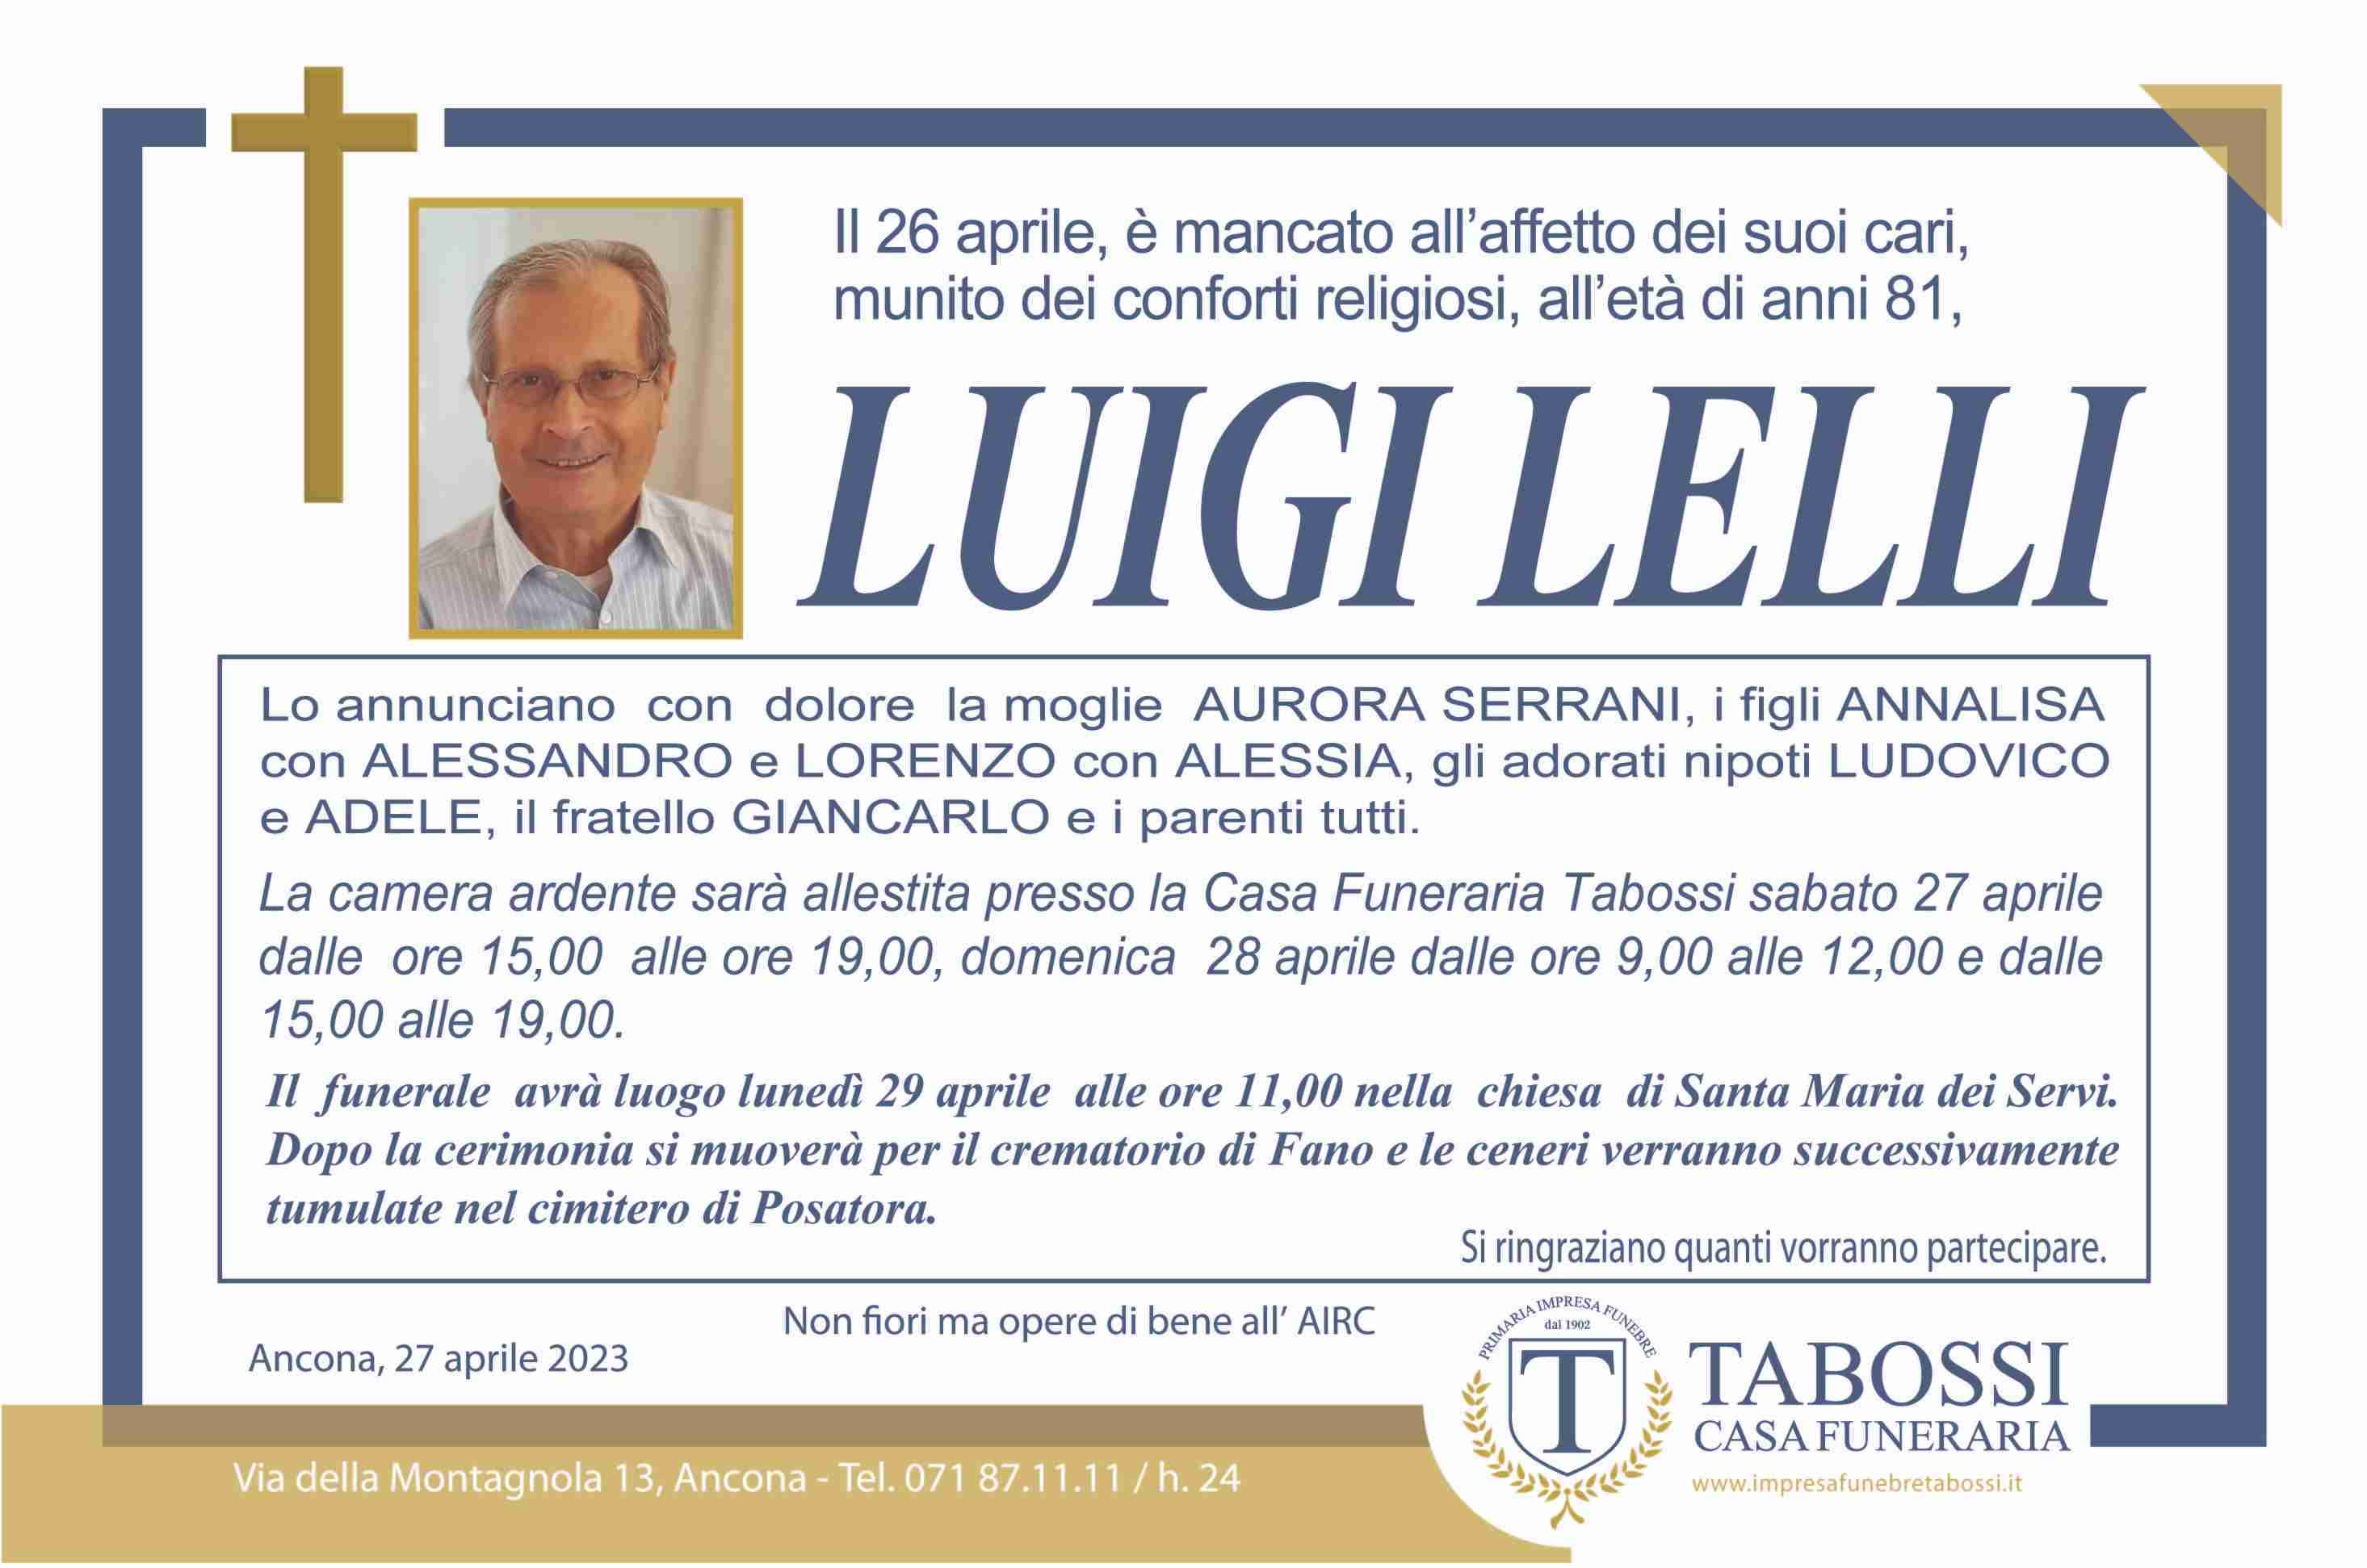 Luigi Lelli